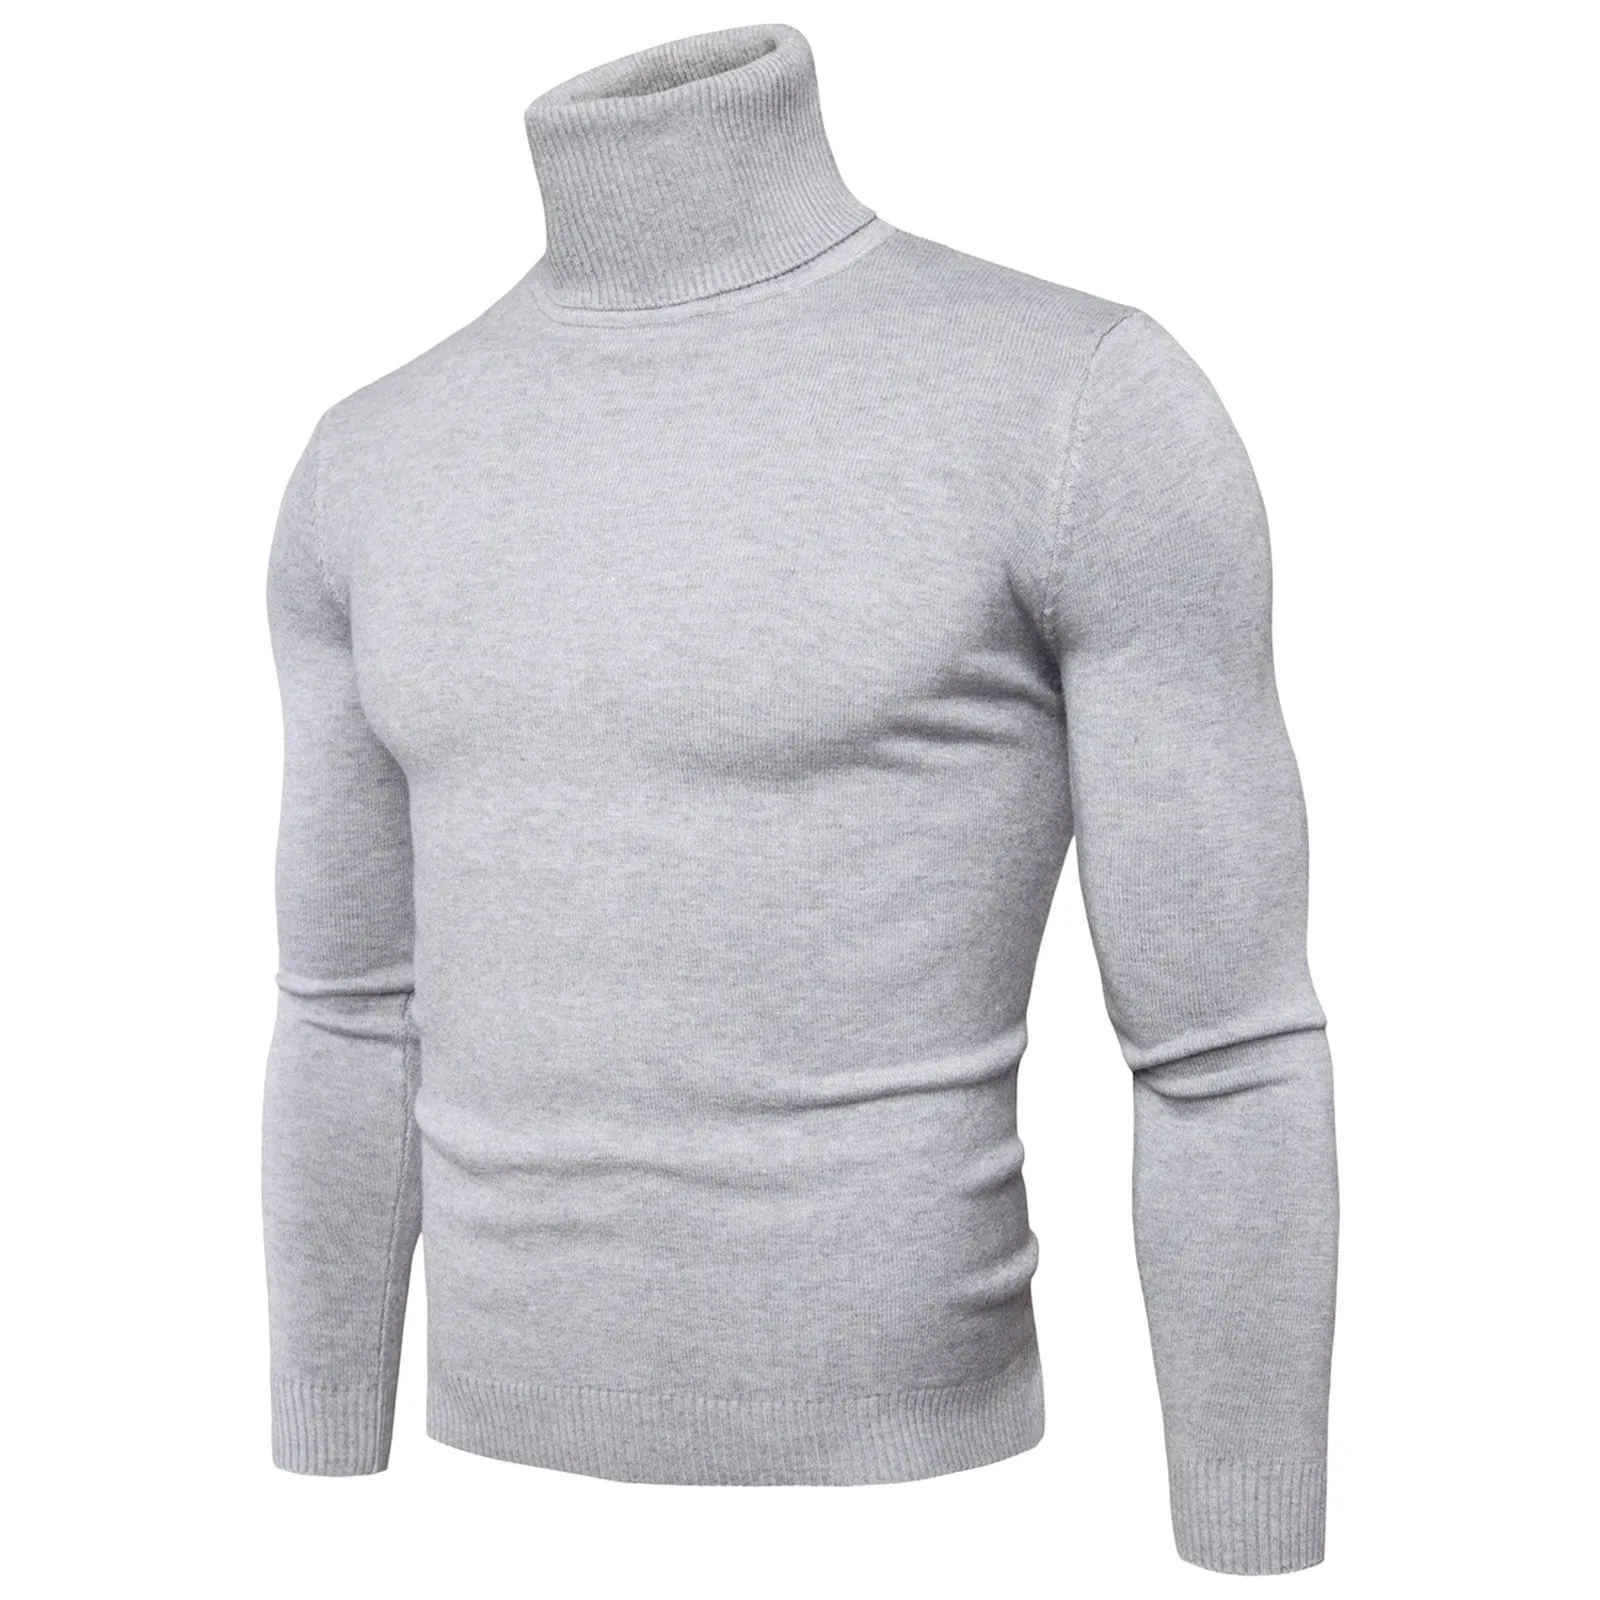 

Men Knit Sweater Pullover Autumn Winter Elegant Soft Basic Turtleneck Sweater Flexibility Solid Color Long Sleeve Slim Fit Tops